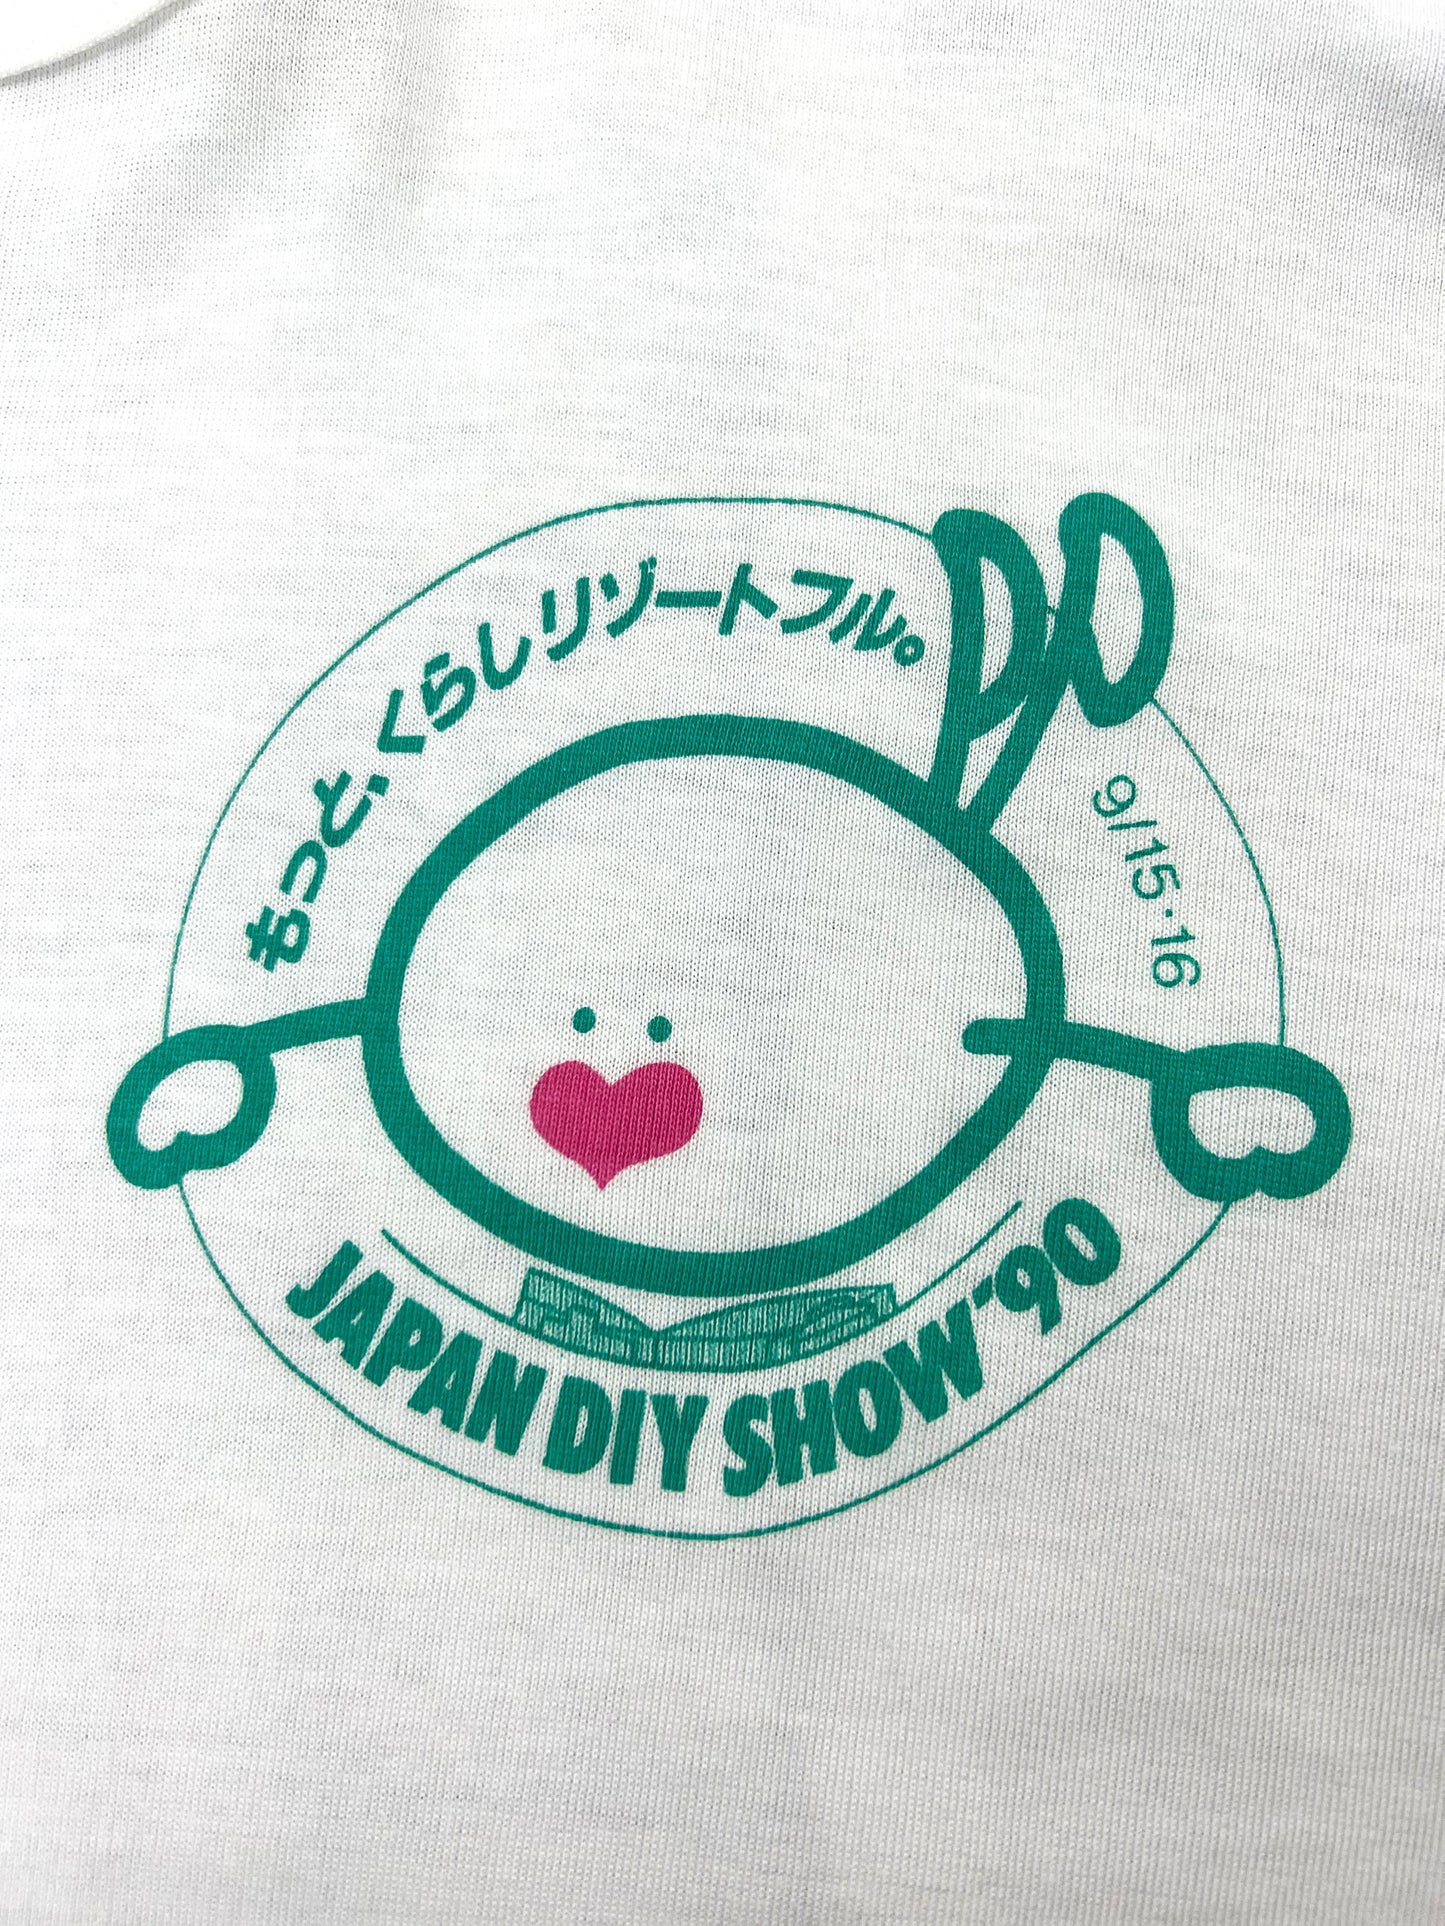 [S-M] Japan DIY Show '90 T-Shirt